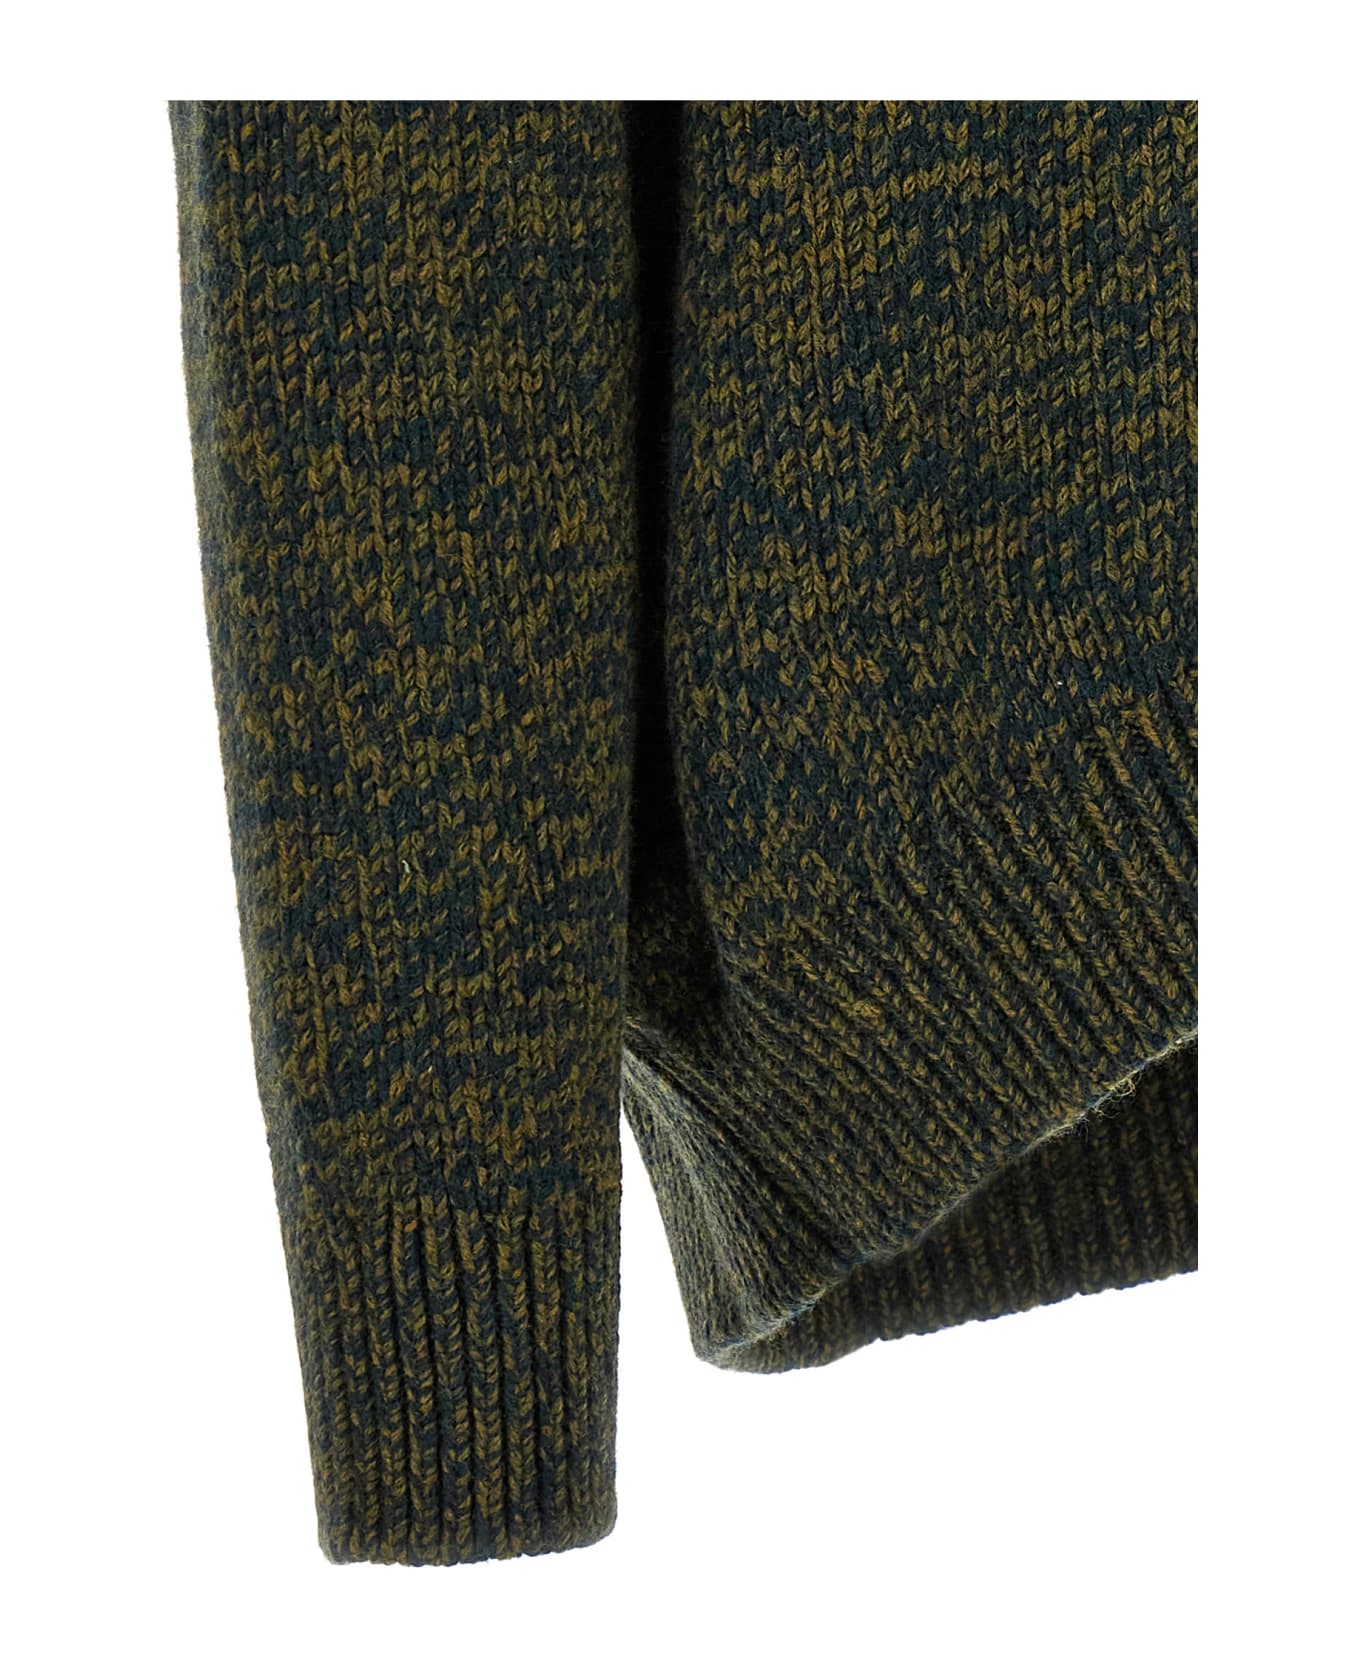 Loewe Double Neck Sweater - Green ニットウェア